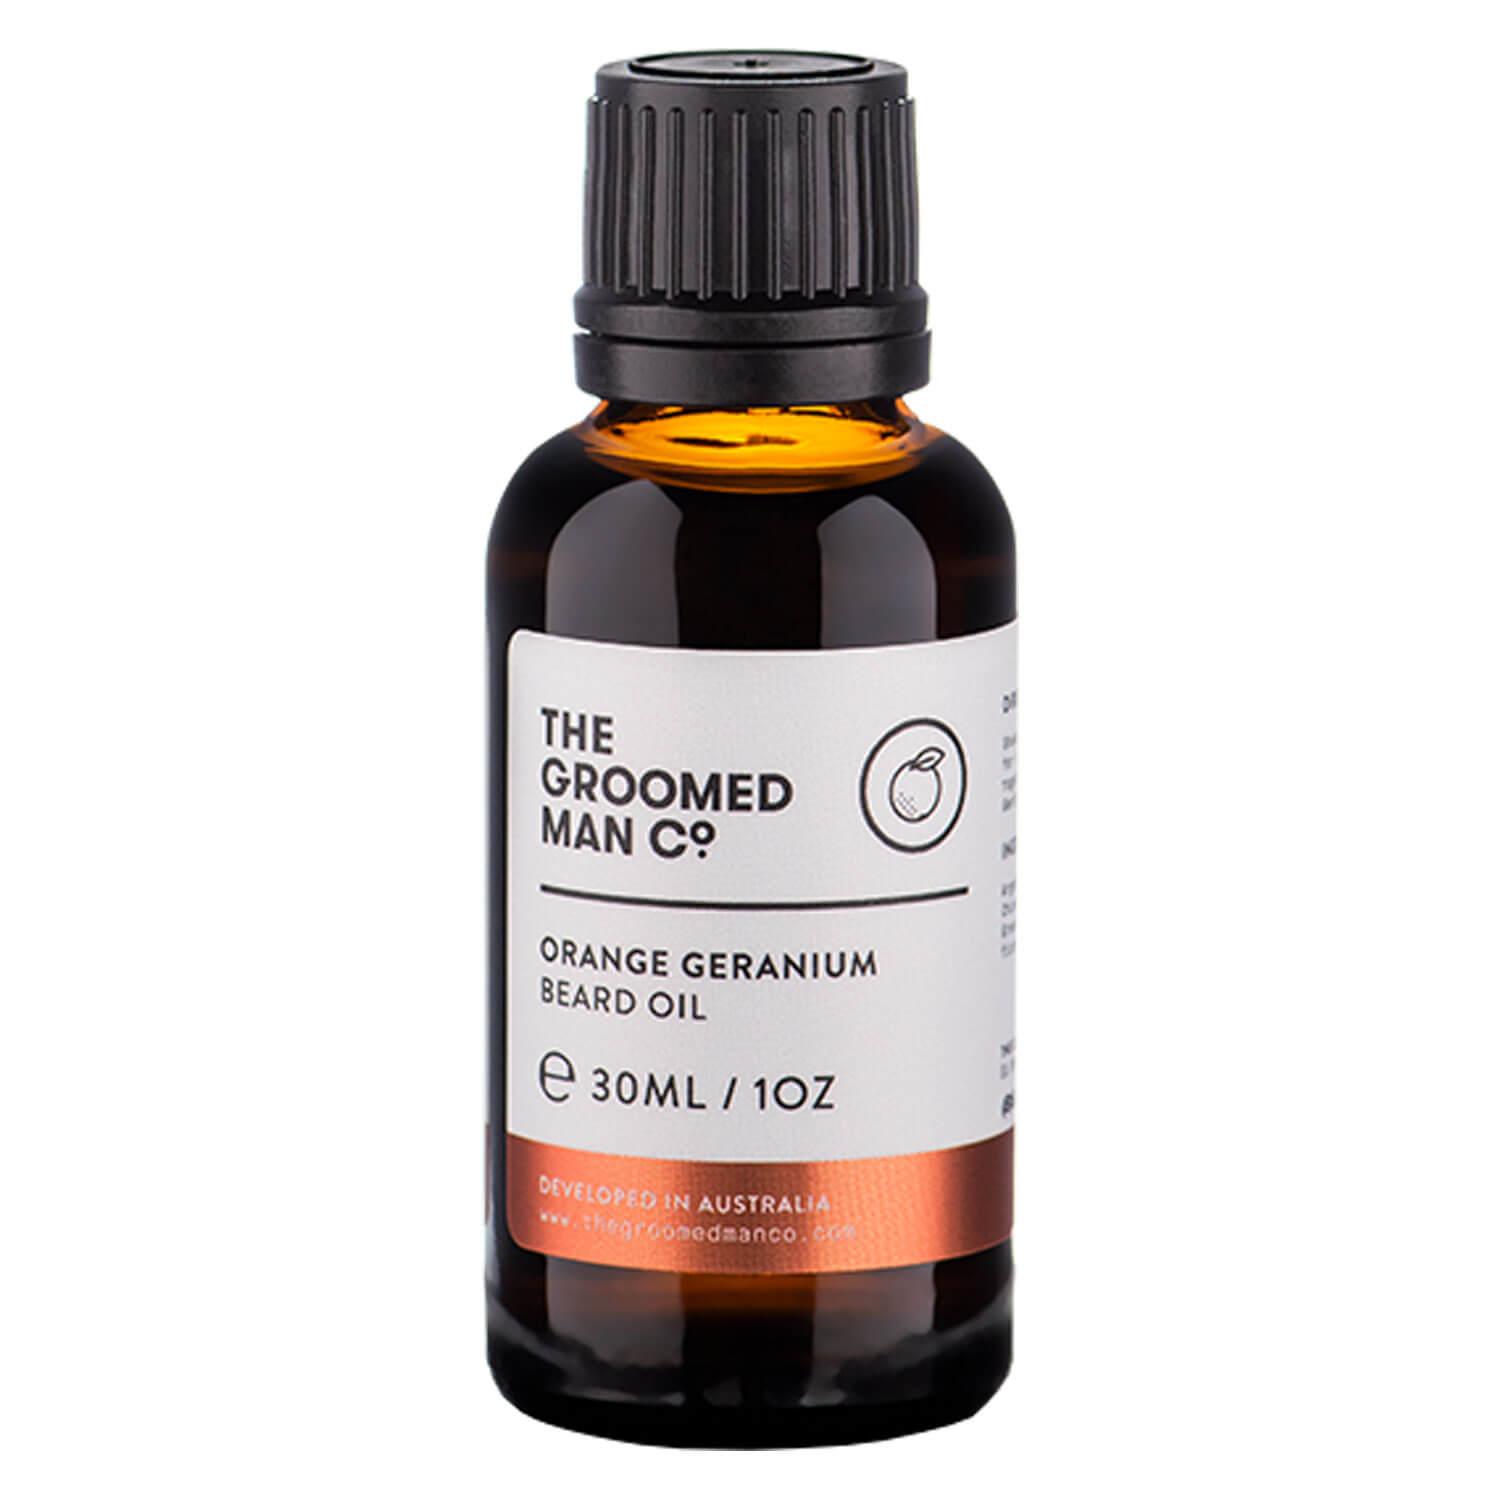 THE GROOMED MAN CO. - Orange Geranium Beard Oil